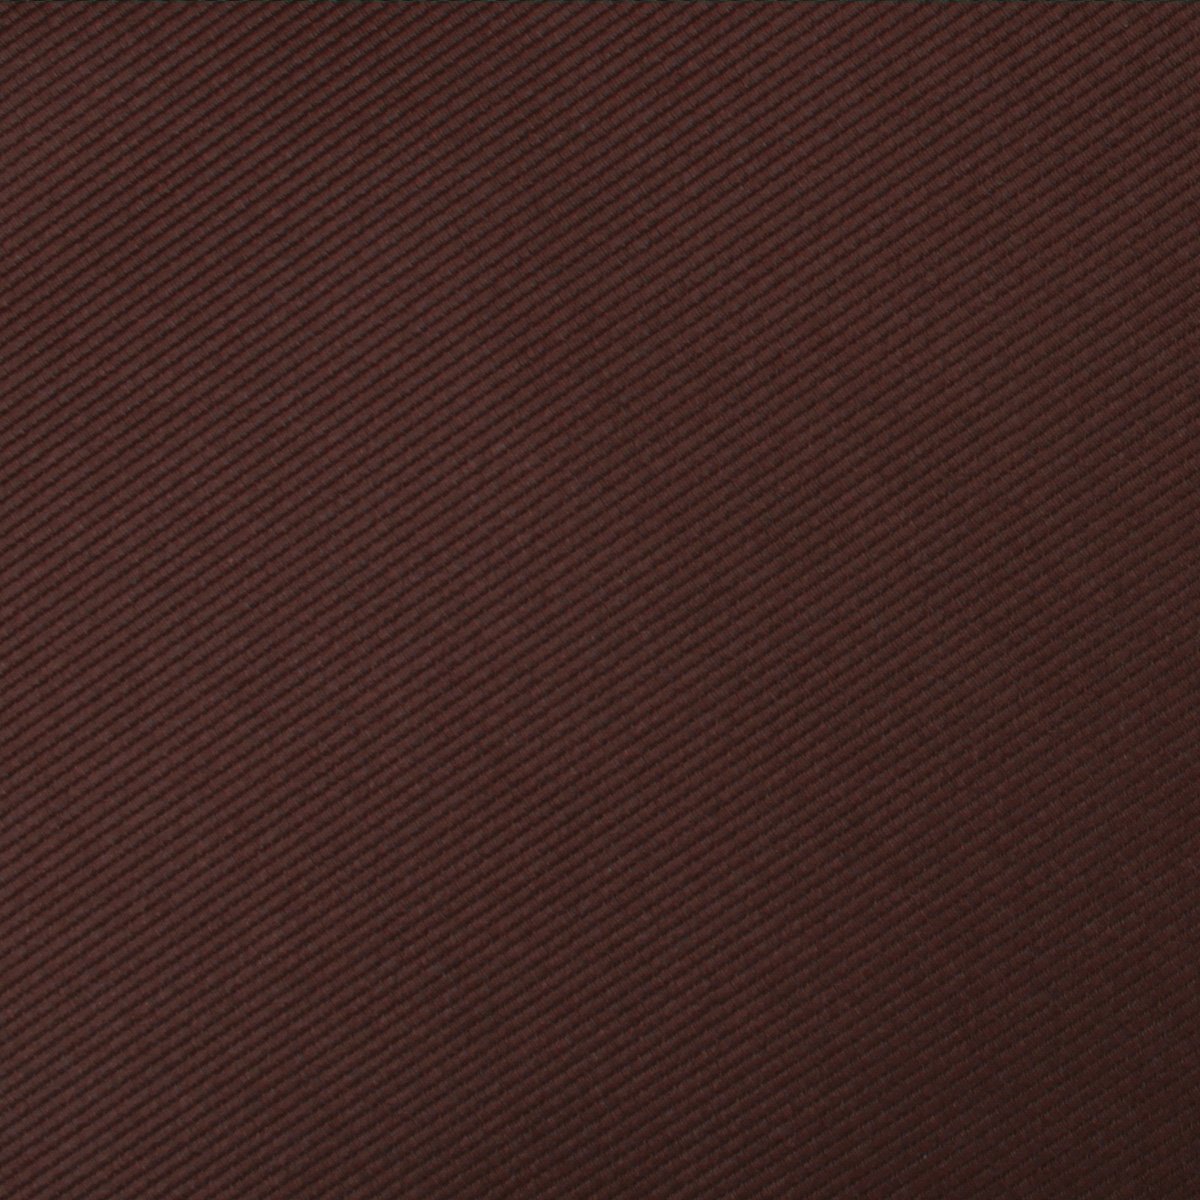 Chocolate Brown Twill Skinny Tie Fabric